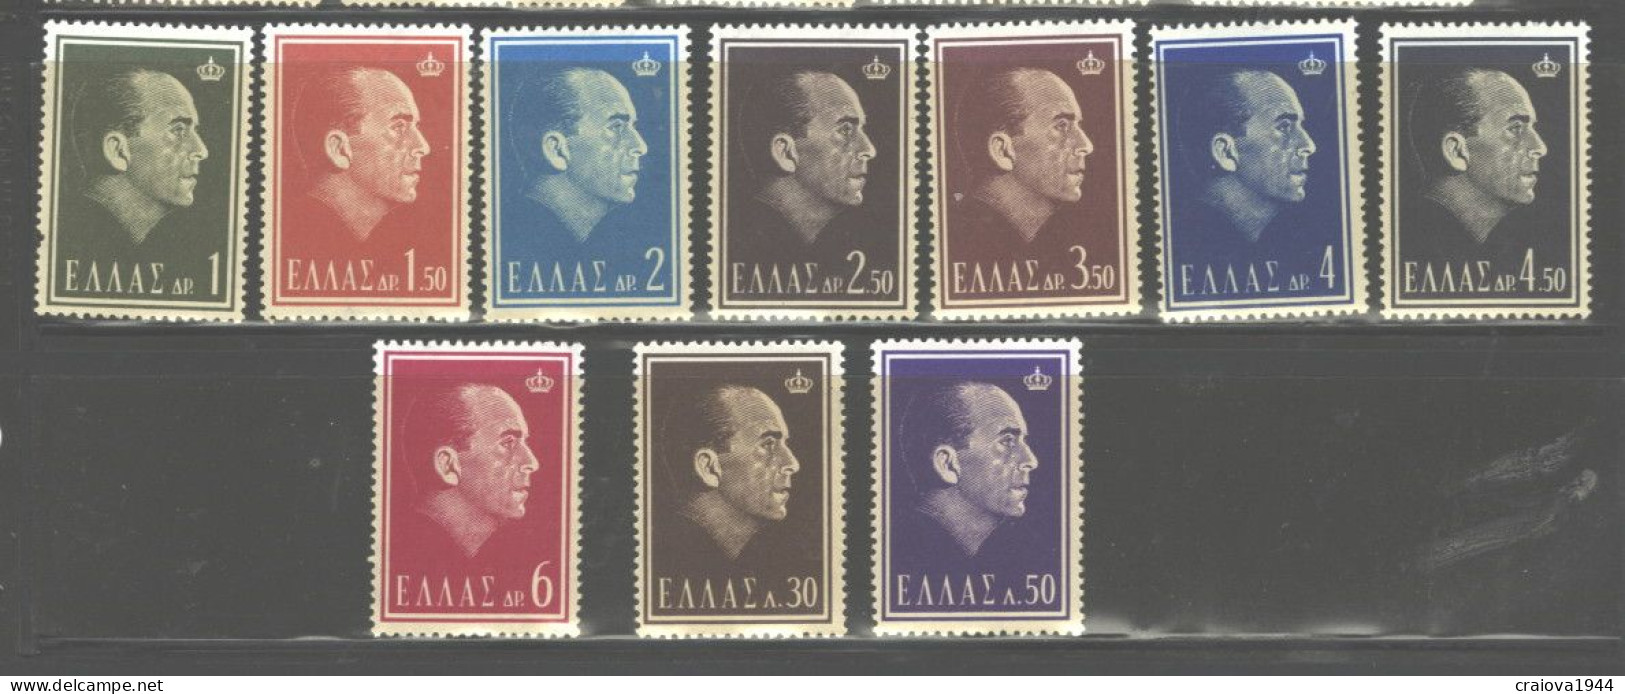 GREECE 1964 KING PAUL II #778 - 787 MNH - Unused Stamps